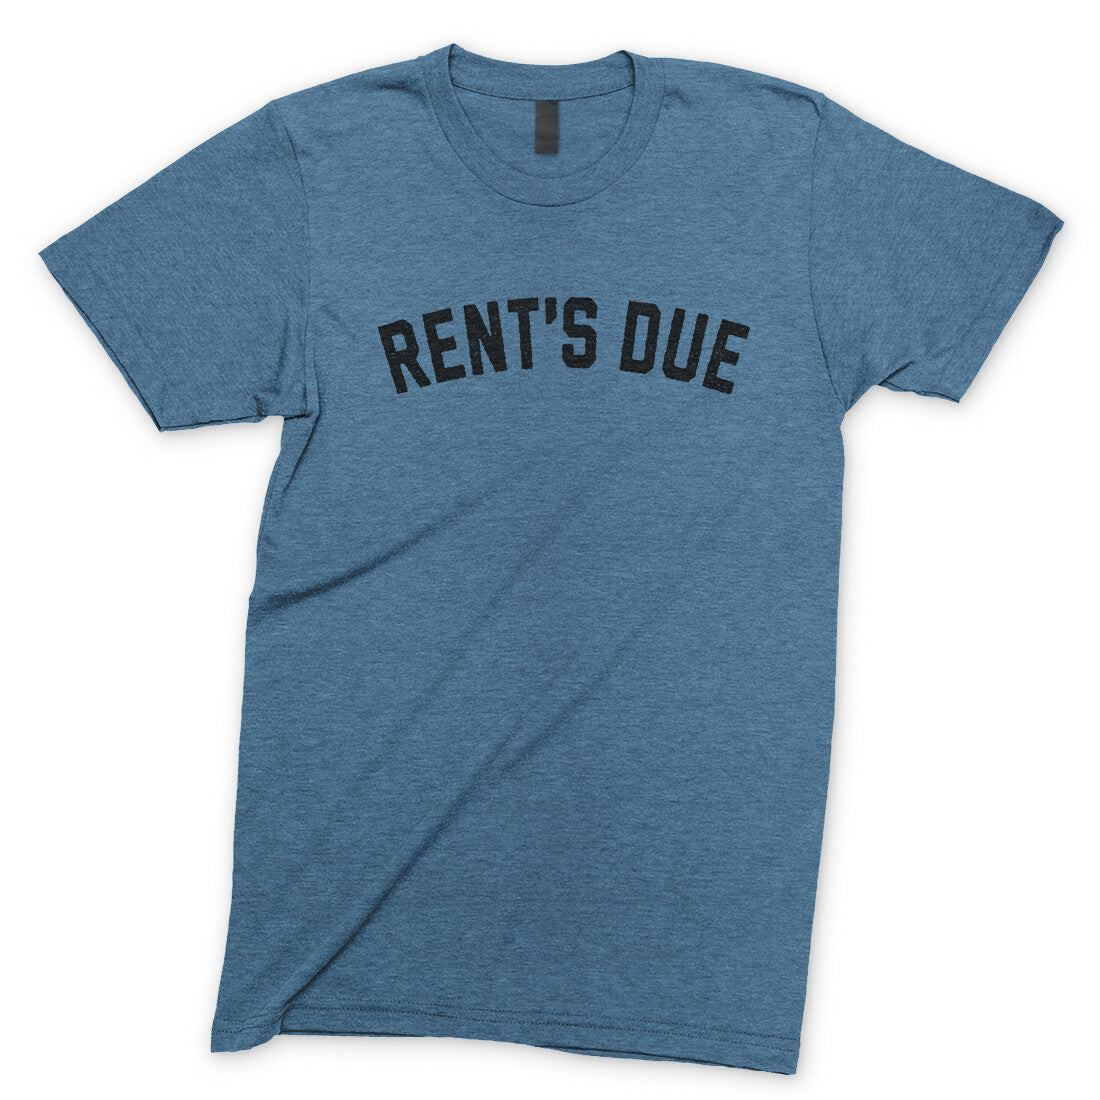 Rent's Due in Heather Indigo Color